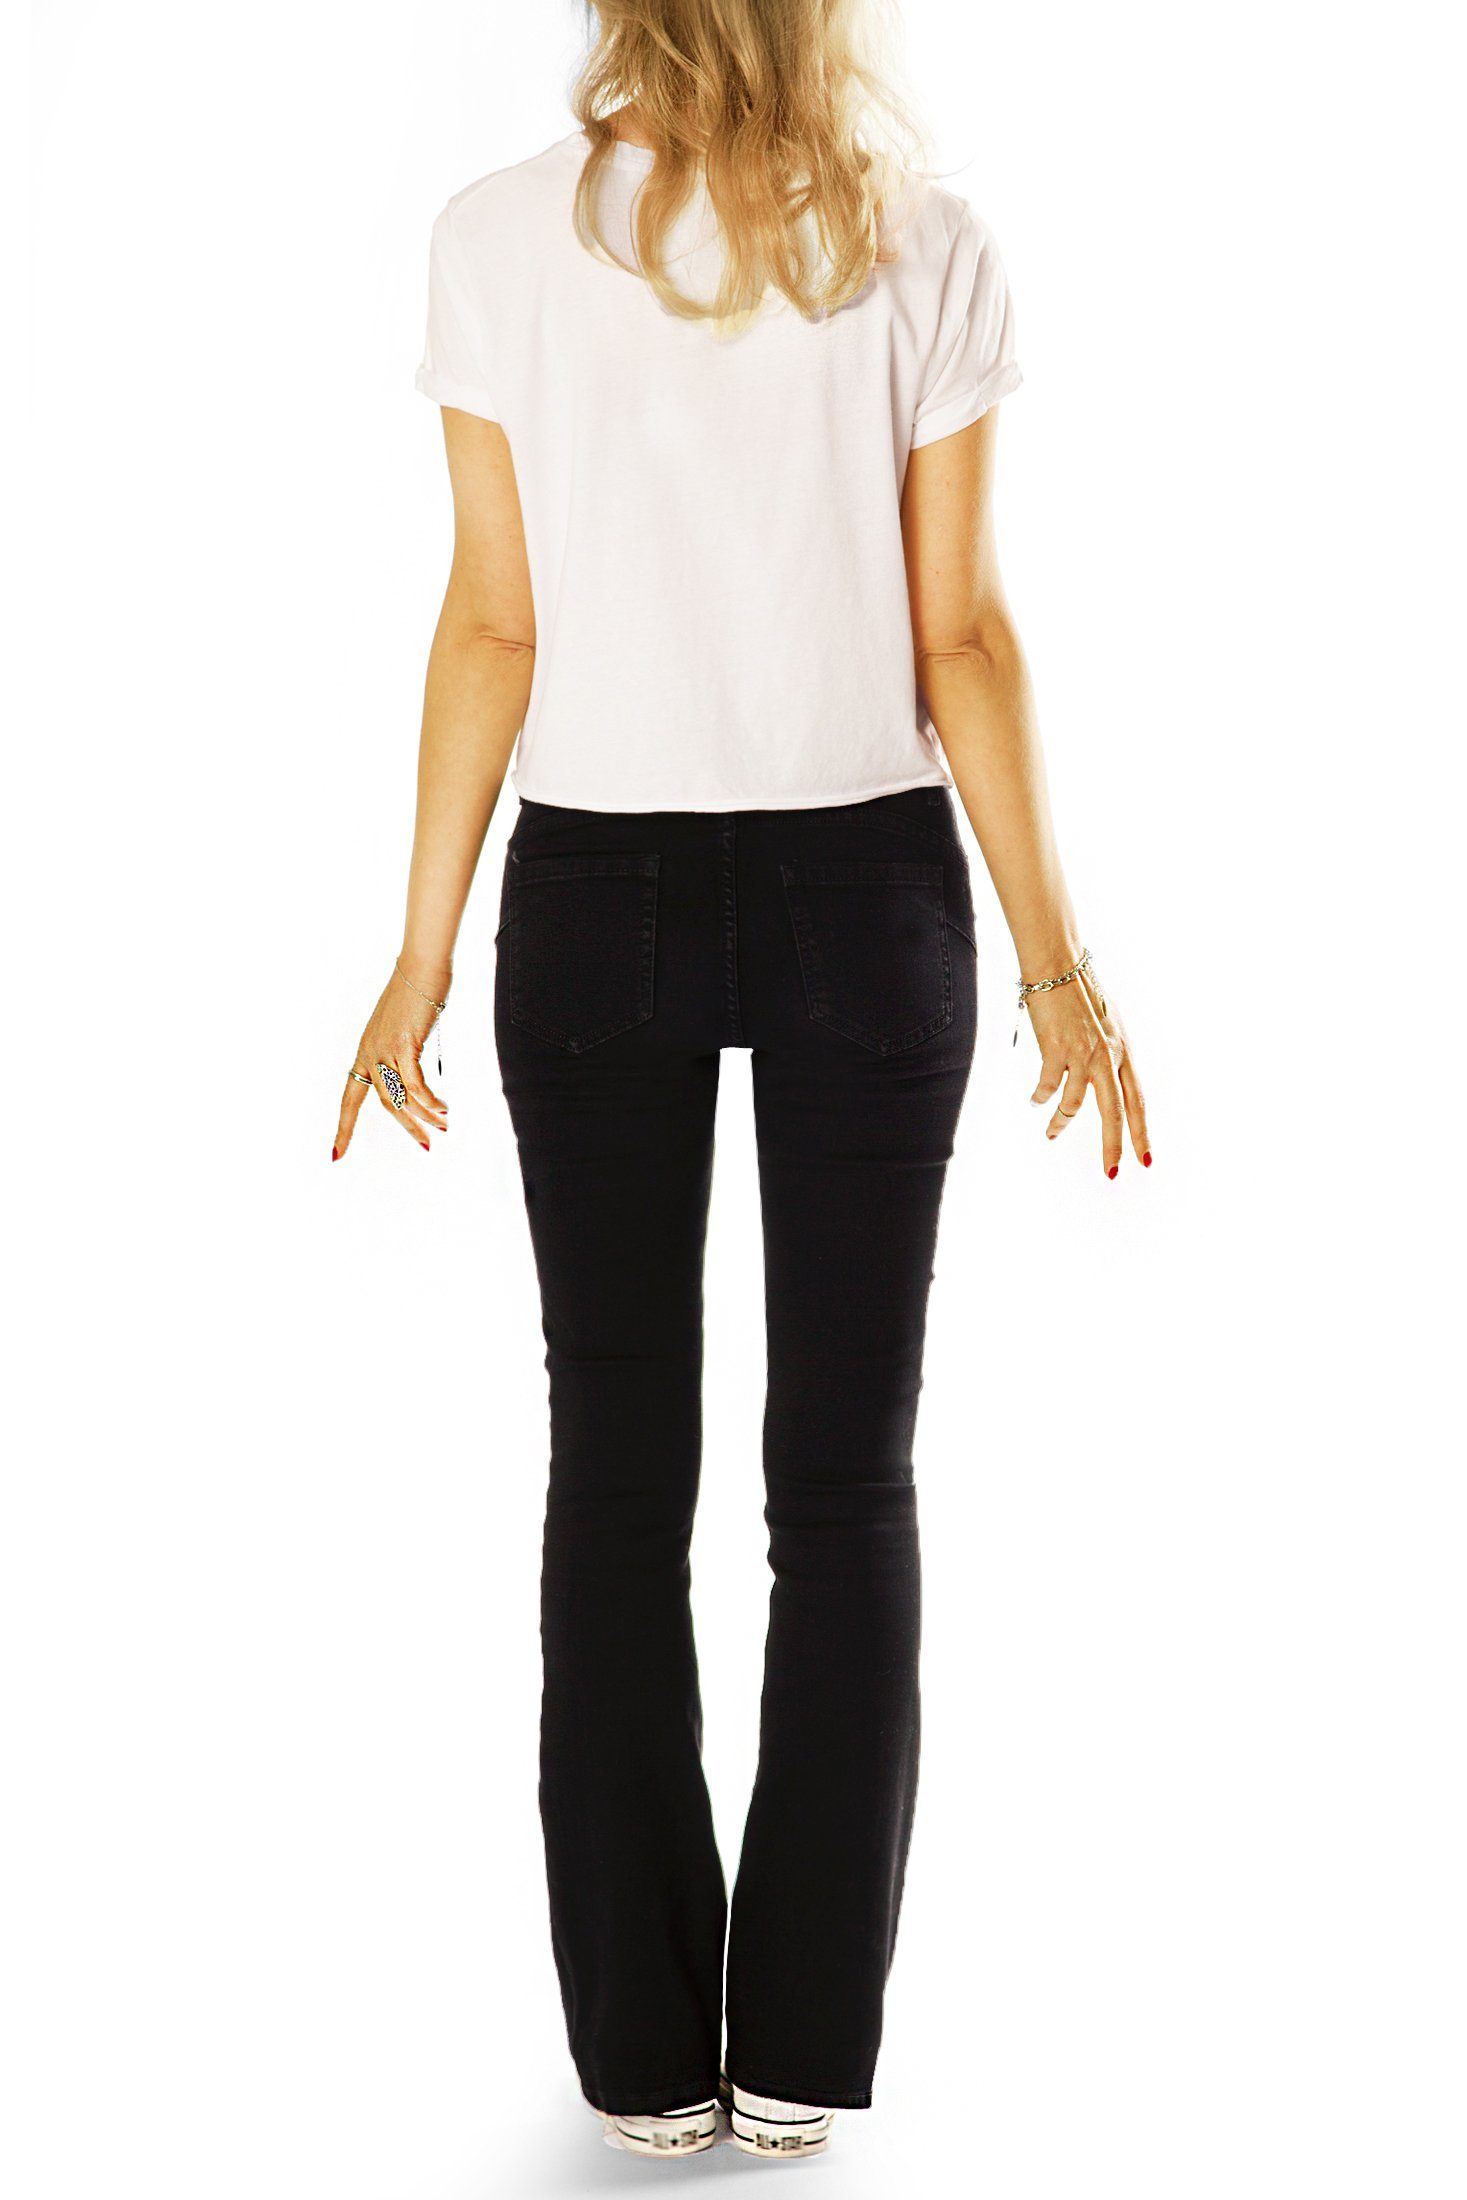 be styled Bootcut-Jeans Jeans - Basic Cut waist, medium Boot j2L-1 Hose Schlag stretchig Waist Stretch-Anteil, Damen Medium mit bequem, 5-Pocket-Style, im